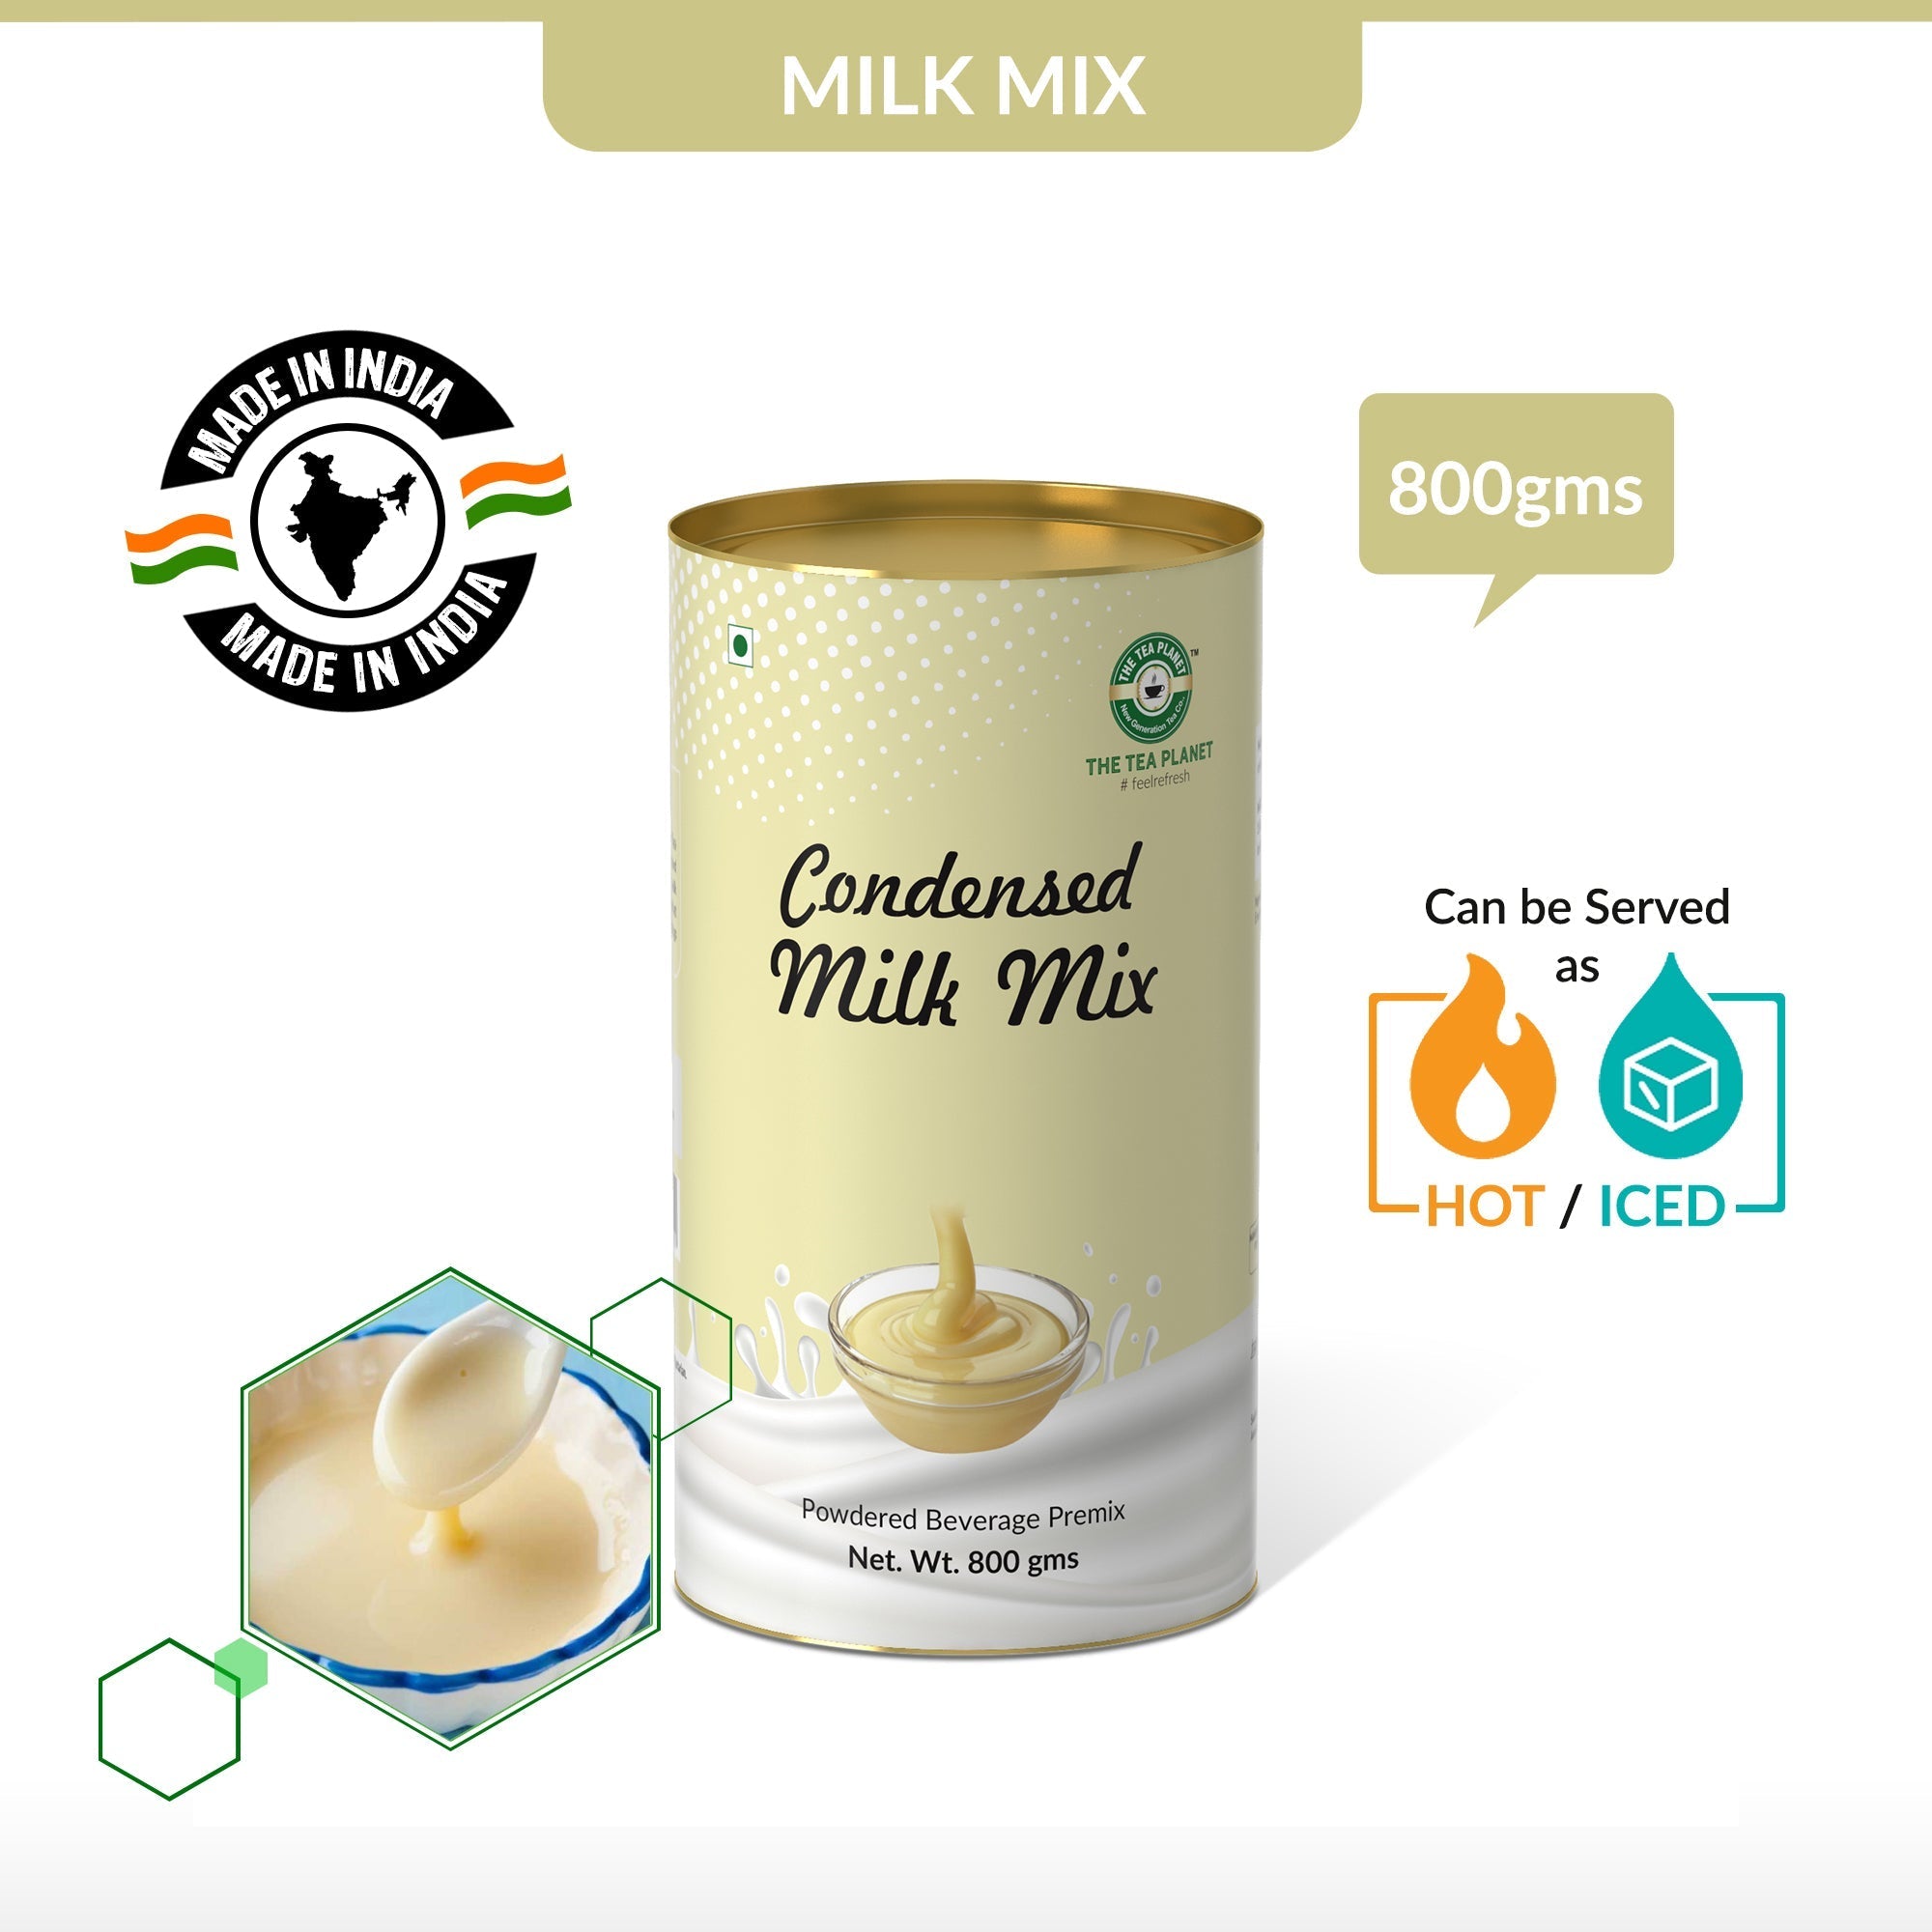 Condensed Milk Flavor Milk Mix - 800 gms